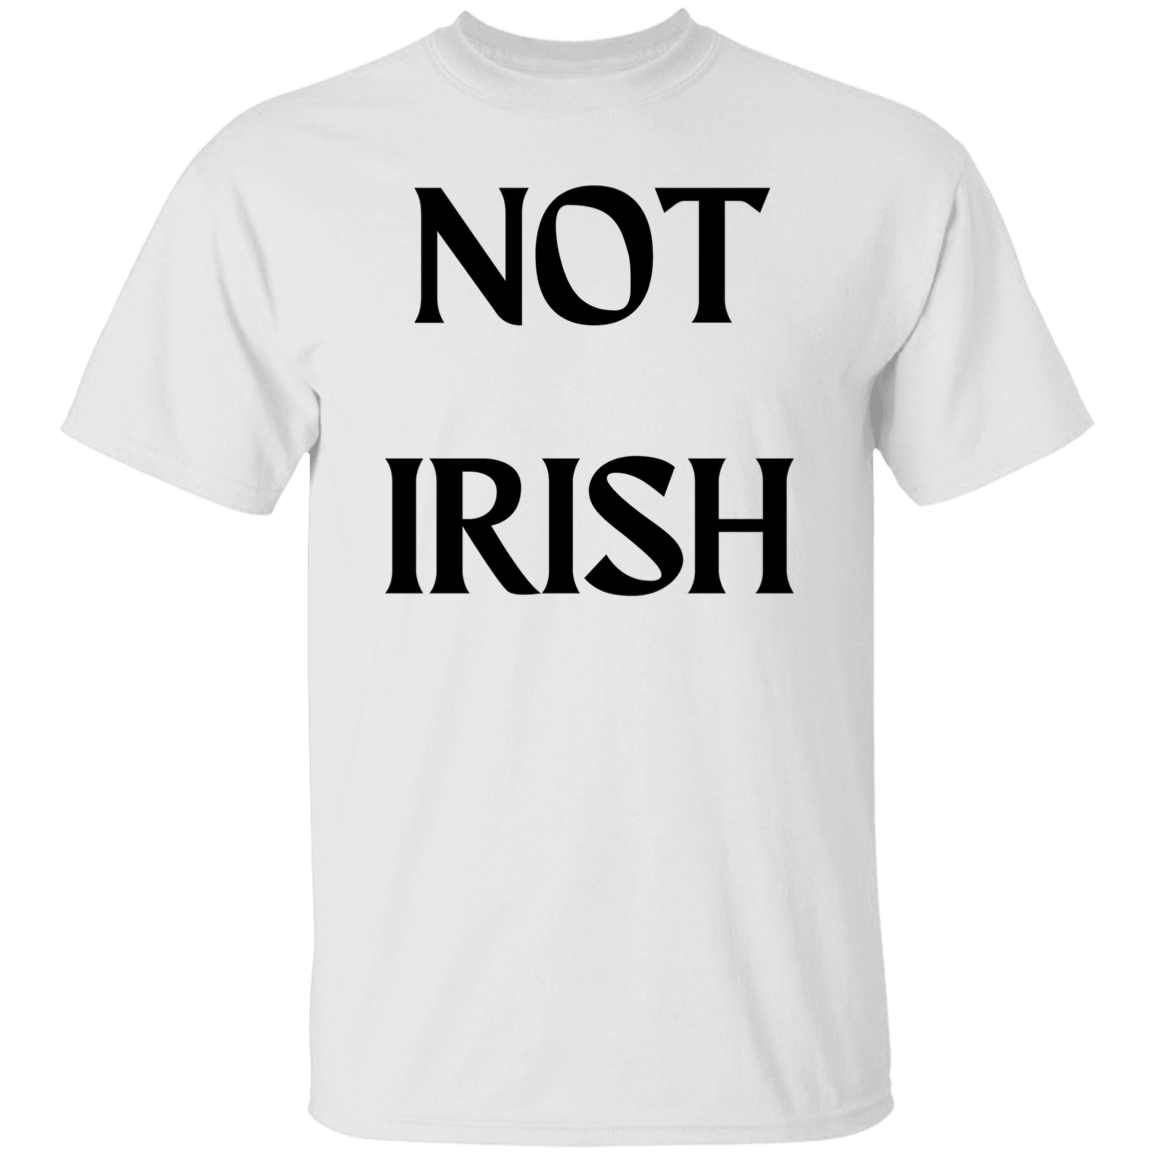 Not Irish T-Shirt